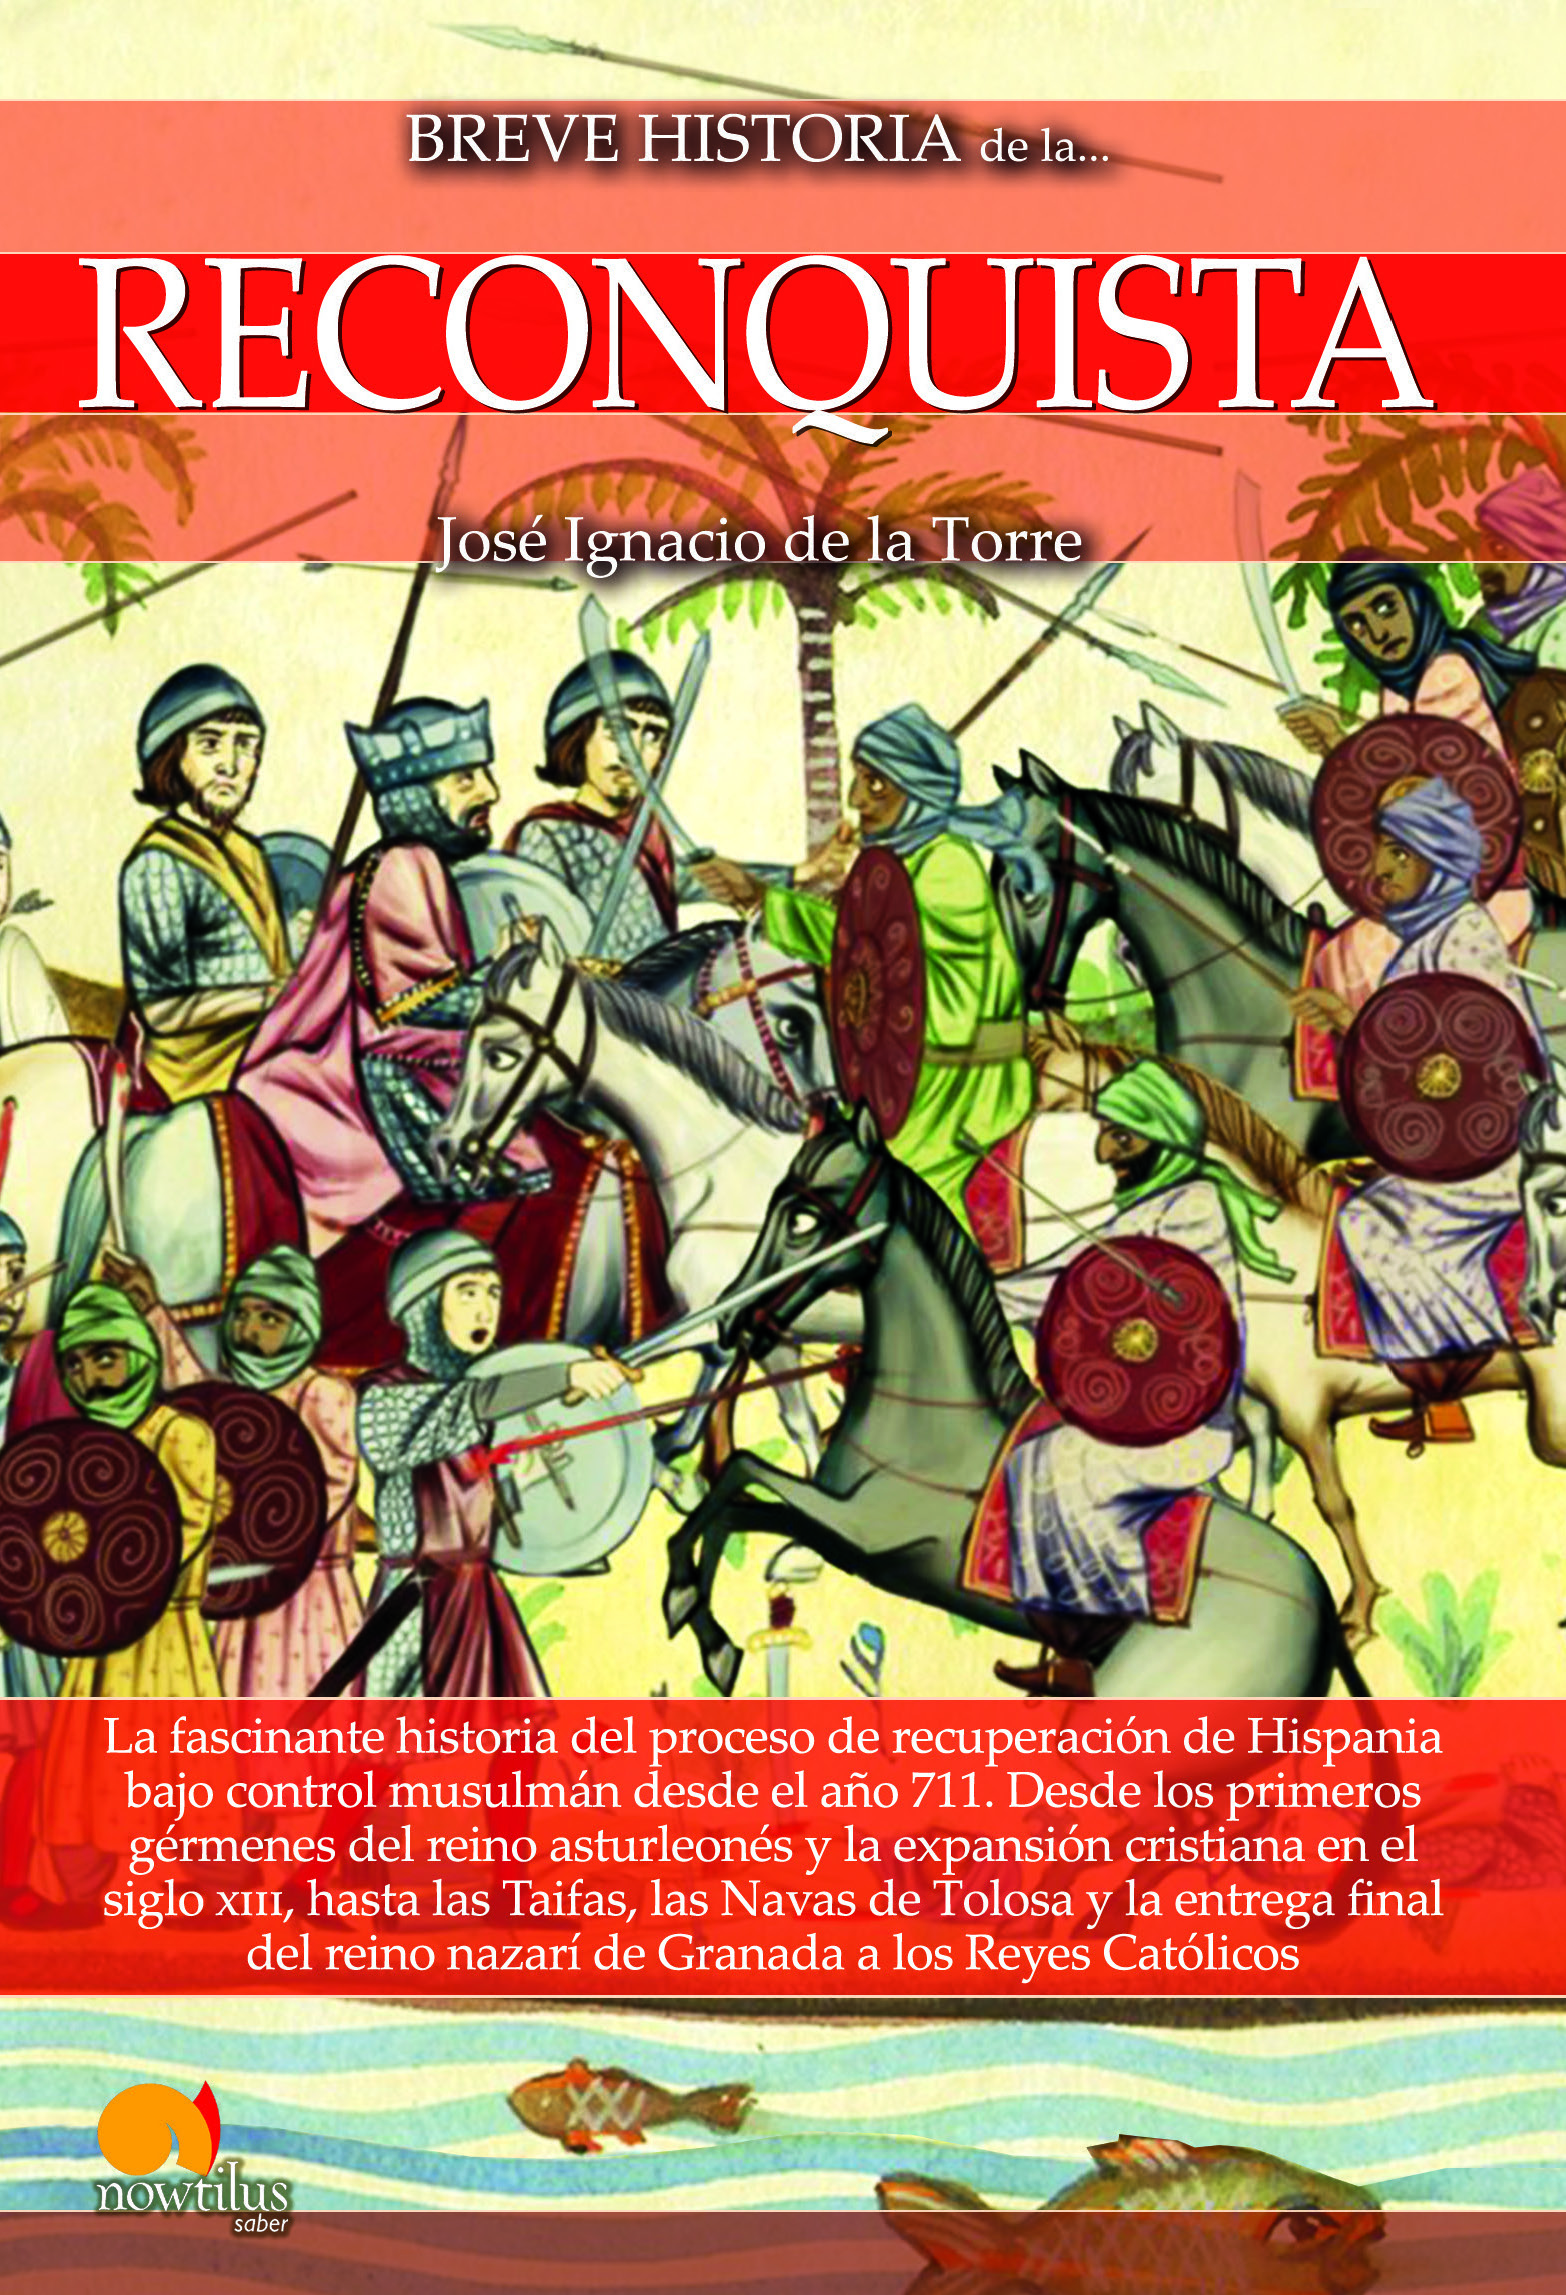 Breve historia de la Reconquista n. e.